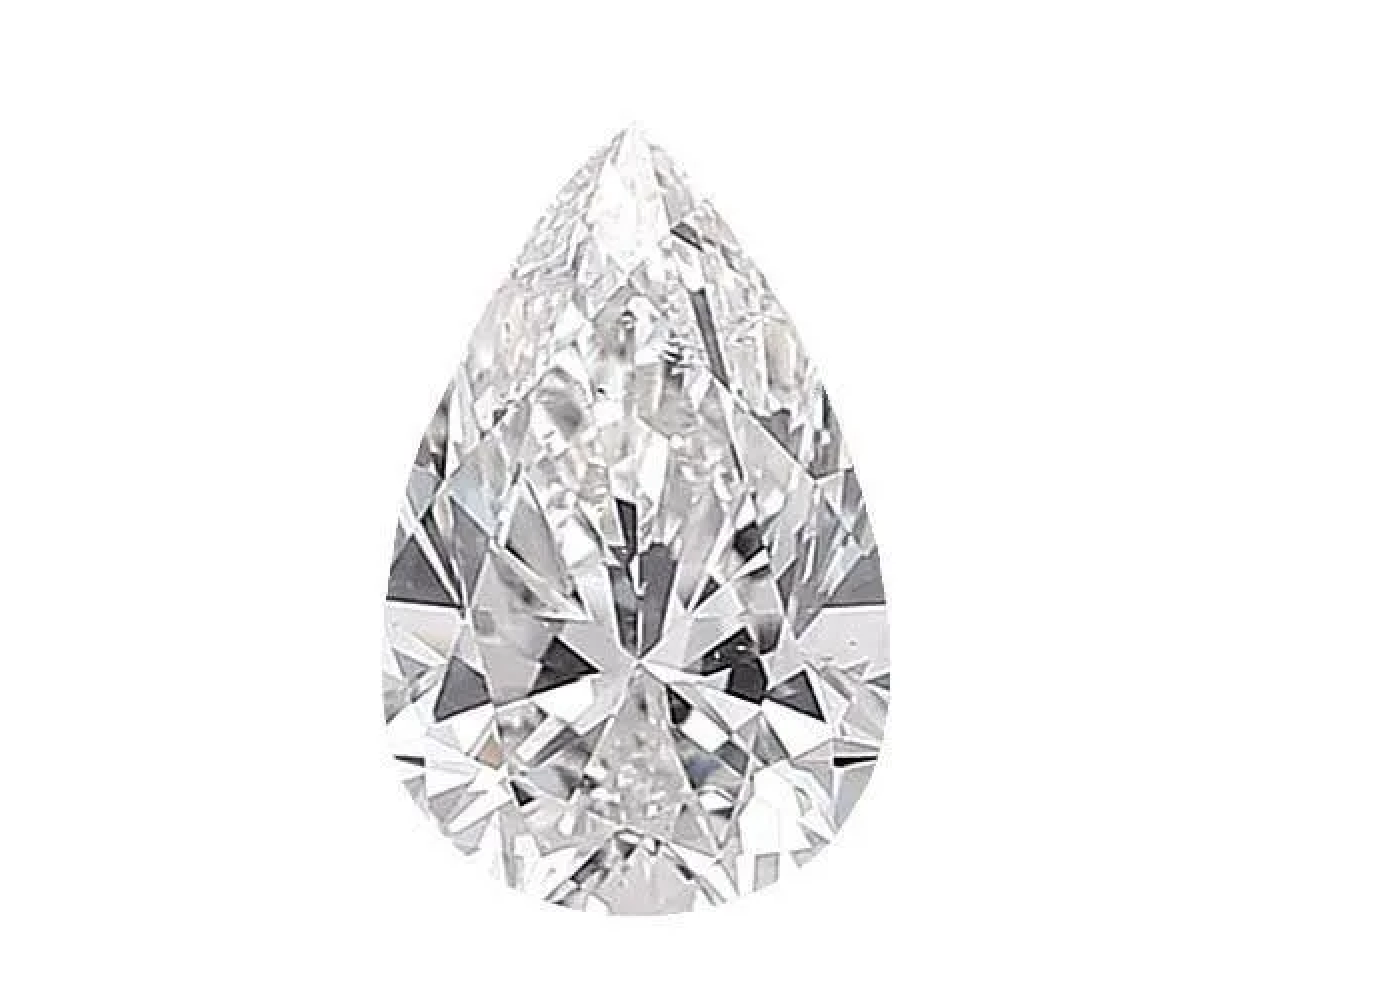 IGI Certified Lab Grown Diamonds - Wholesale prices 1-2 carats